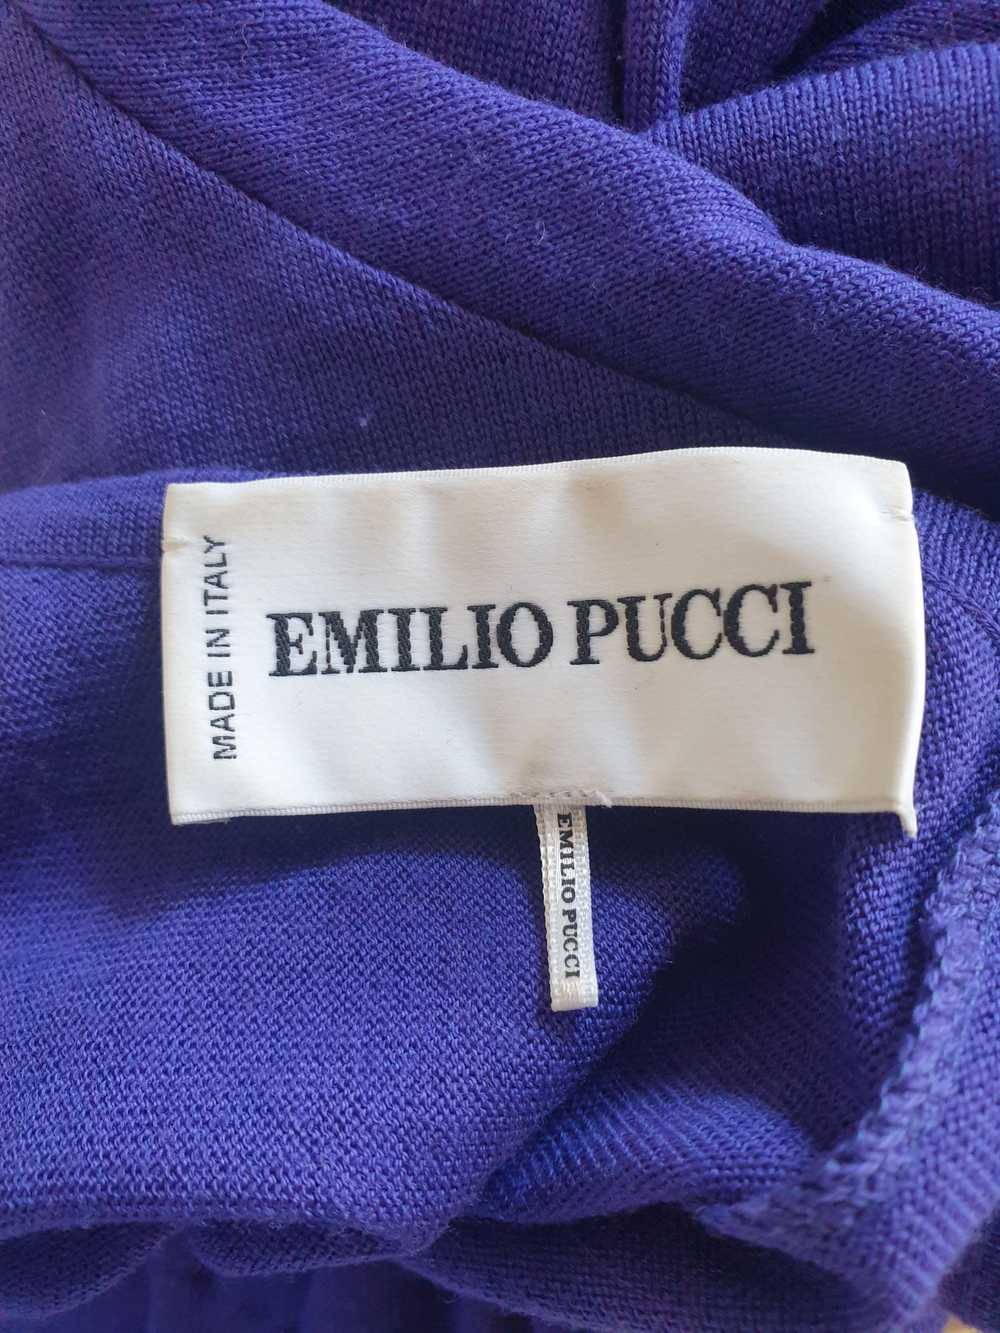 Emilio Pucci Purple wool fine knit jumper dress - image 6